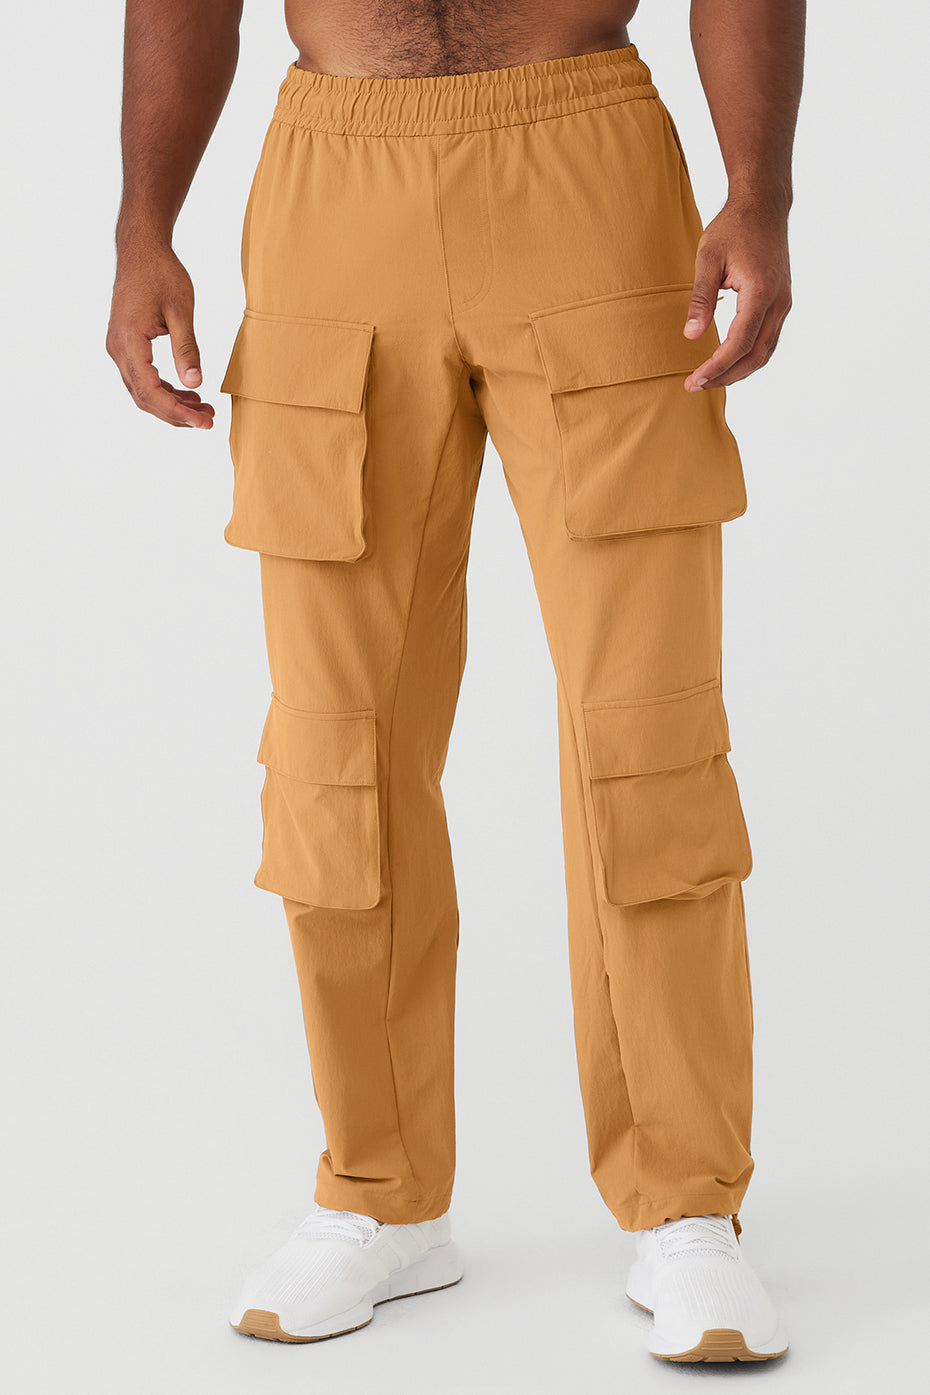 Accolade Sweatpant - Macadamia  Bold jackets, Trendy trouser, Unisex  fashion